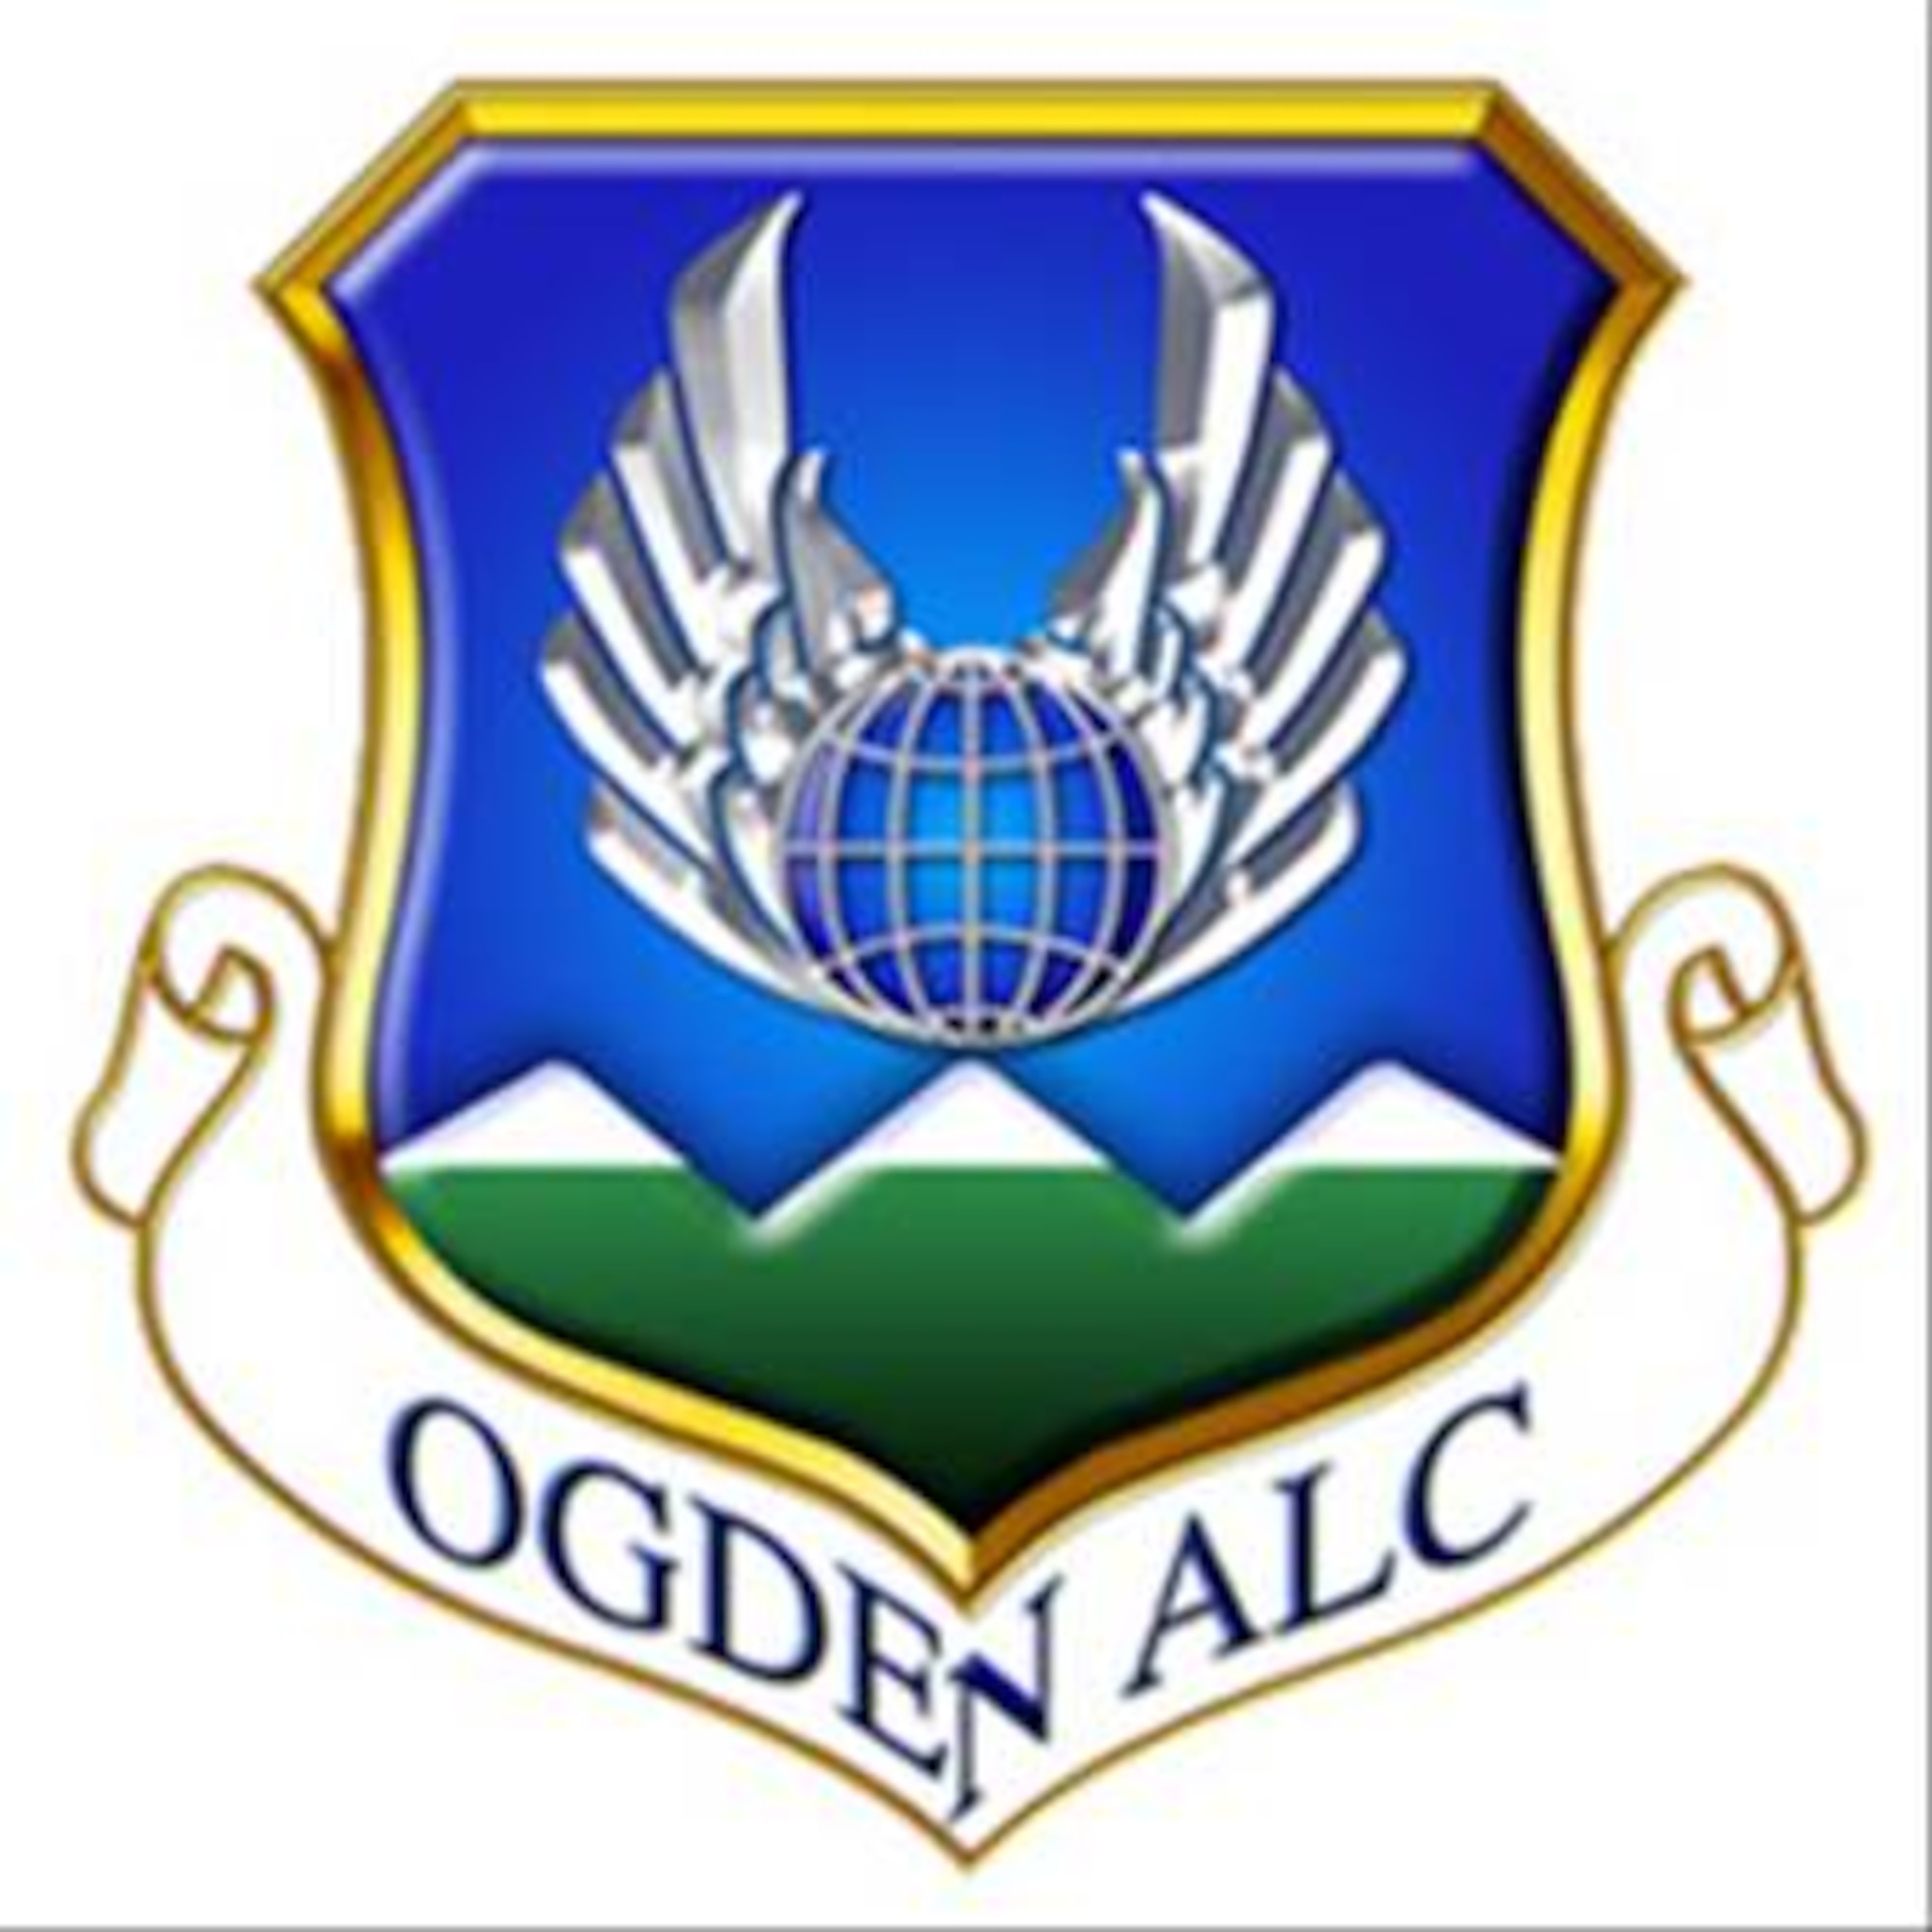 OO-ALC Shield, Air Logistics Center official shield